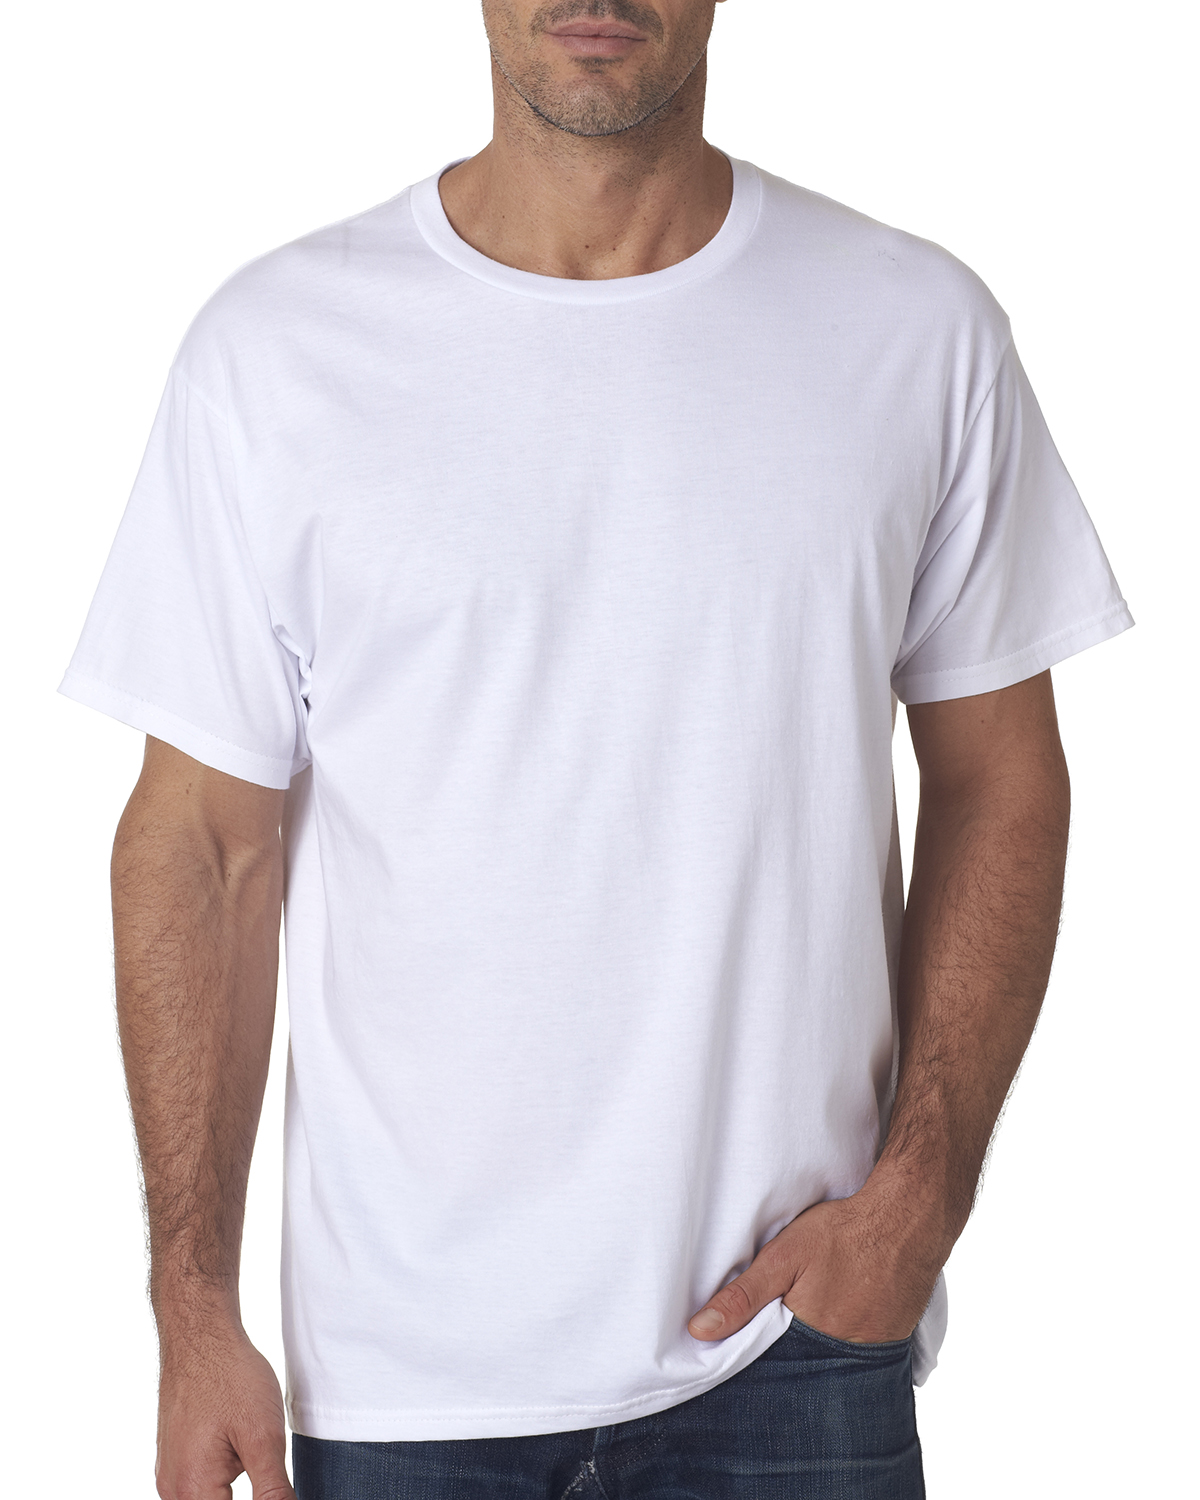 Bayside BA5000 - Adult Ring-Spun Jersey Tee $7.49 - T-Shirts